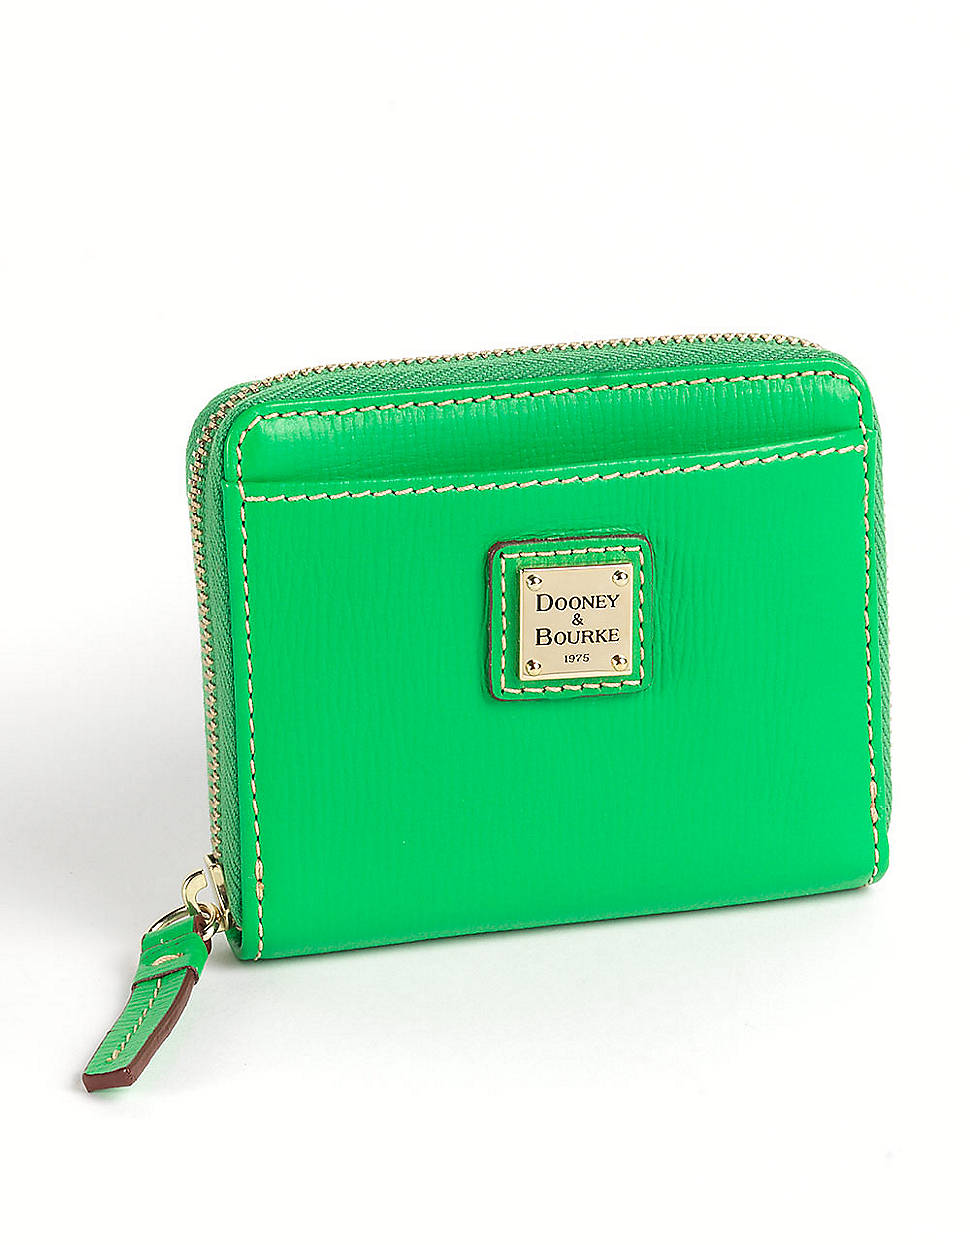 Dooney & Bourke Leather Zip Around Wallet in Green (kelly green) | Lyst